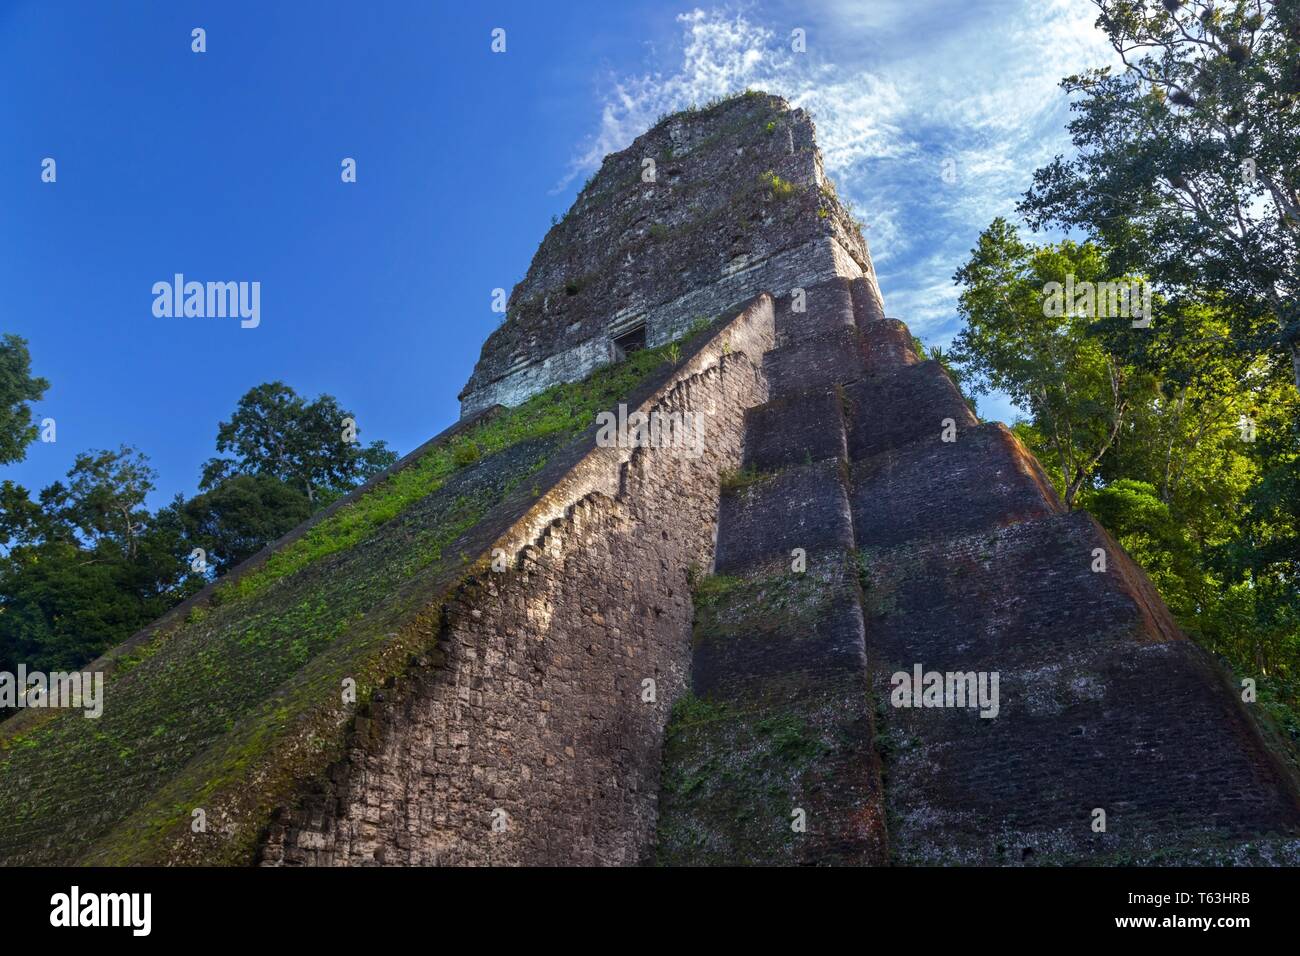 Seitenansicht der antiken Ruinen der Maya-Pyramide, bekannt als Tikal Tempel V (Tempel fünf oder Tempel 5), im weltberühmten Nationalpark Guatemala Stockfoto